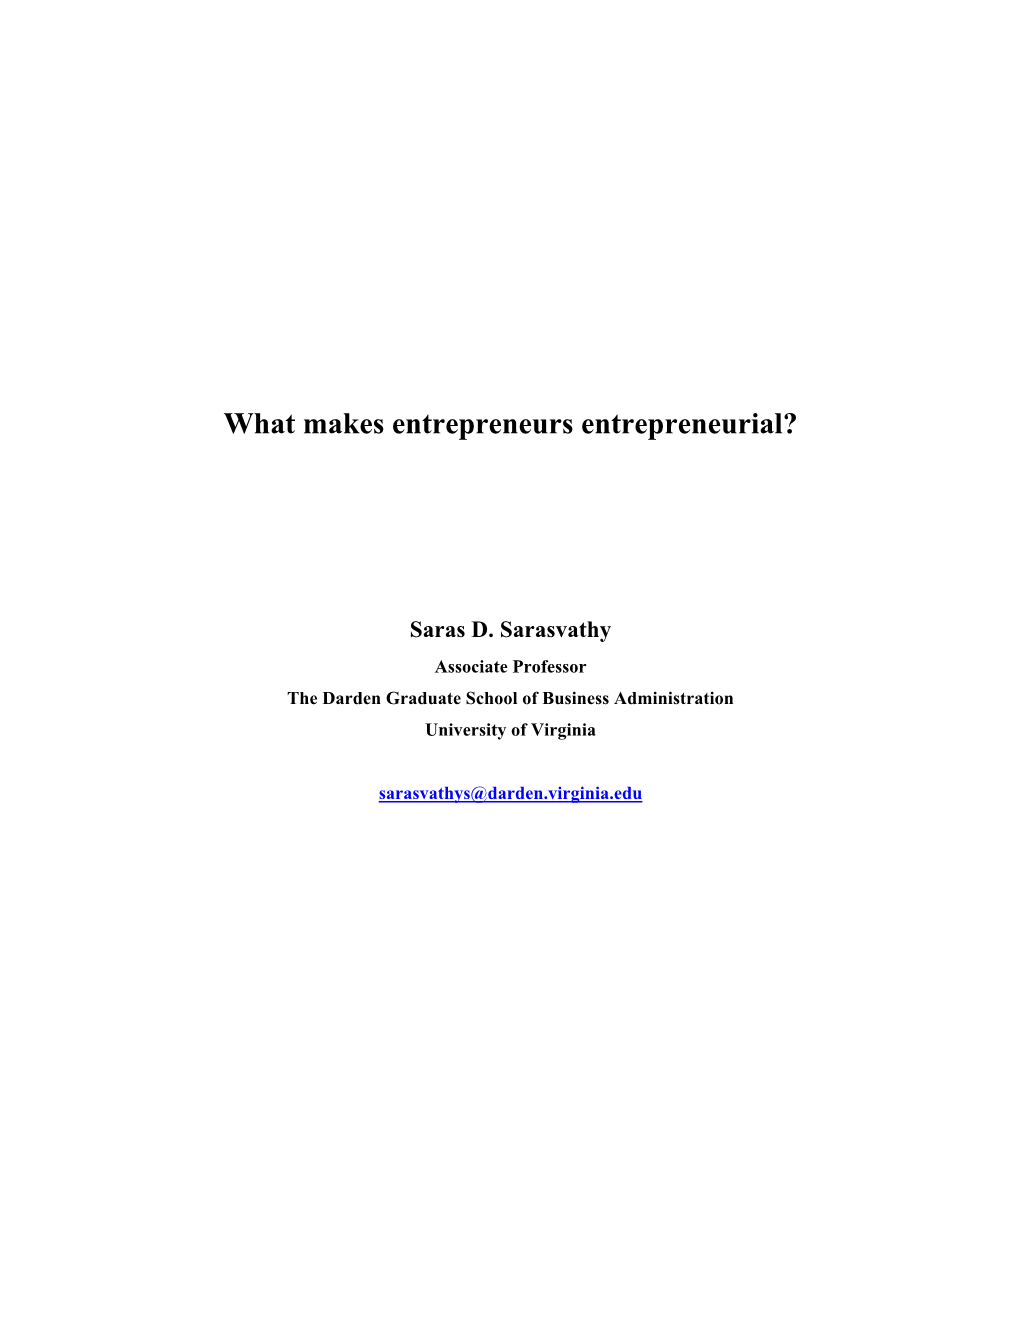 What Makes Entrepreneurs Entrepreneurial?